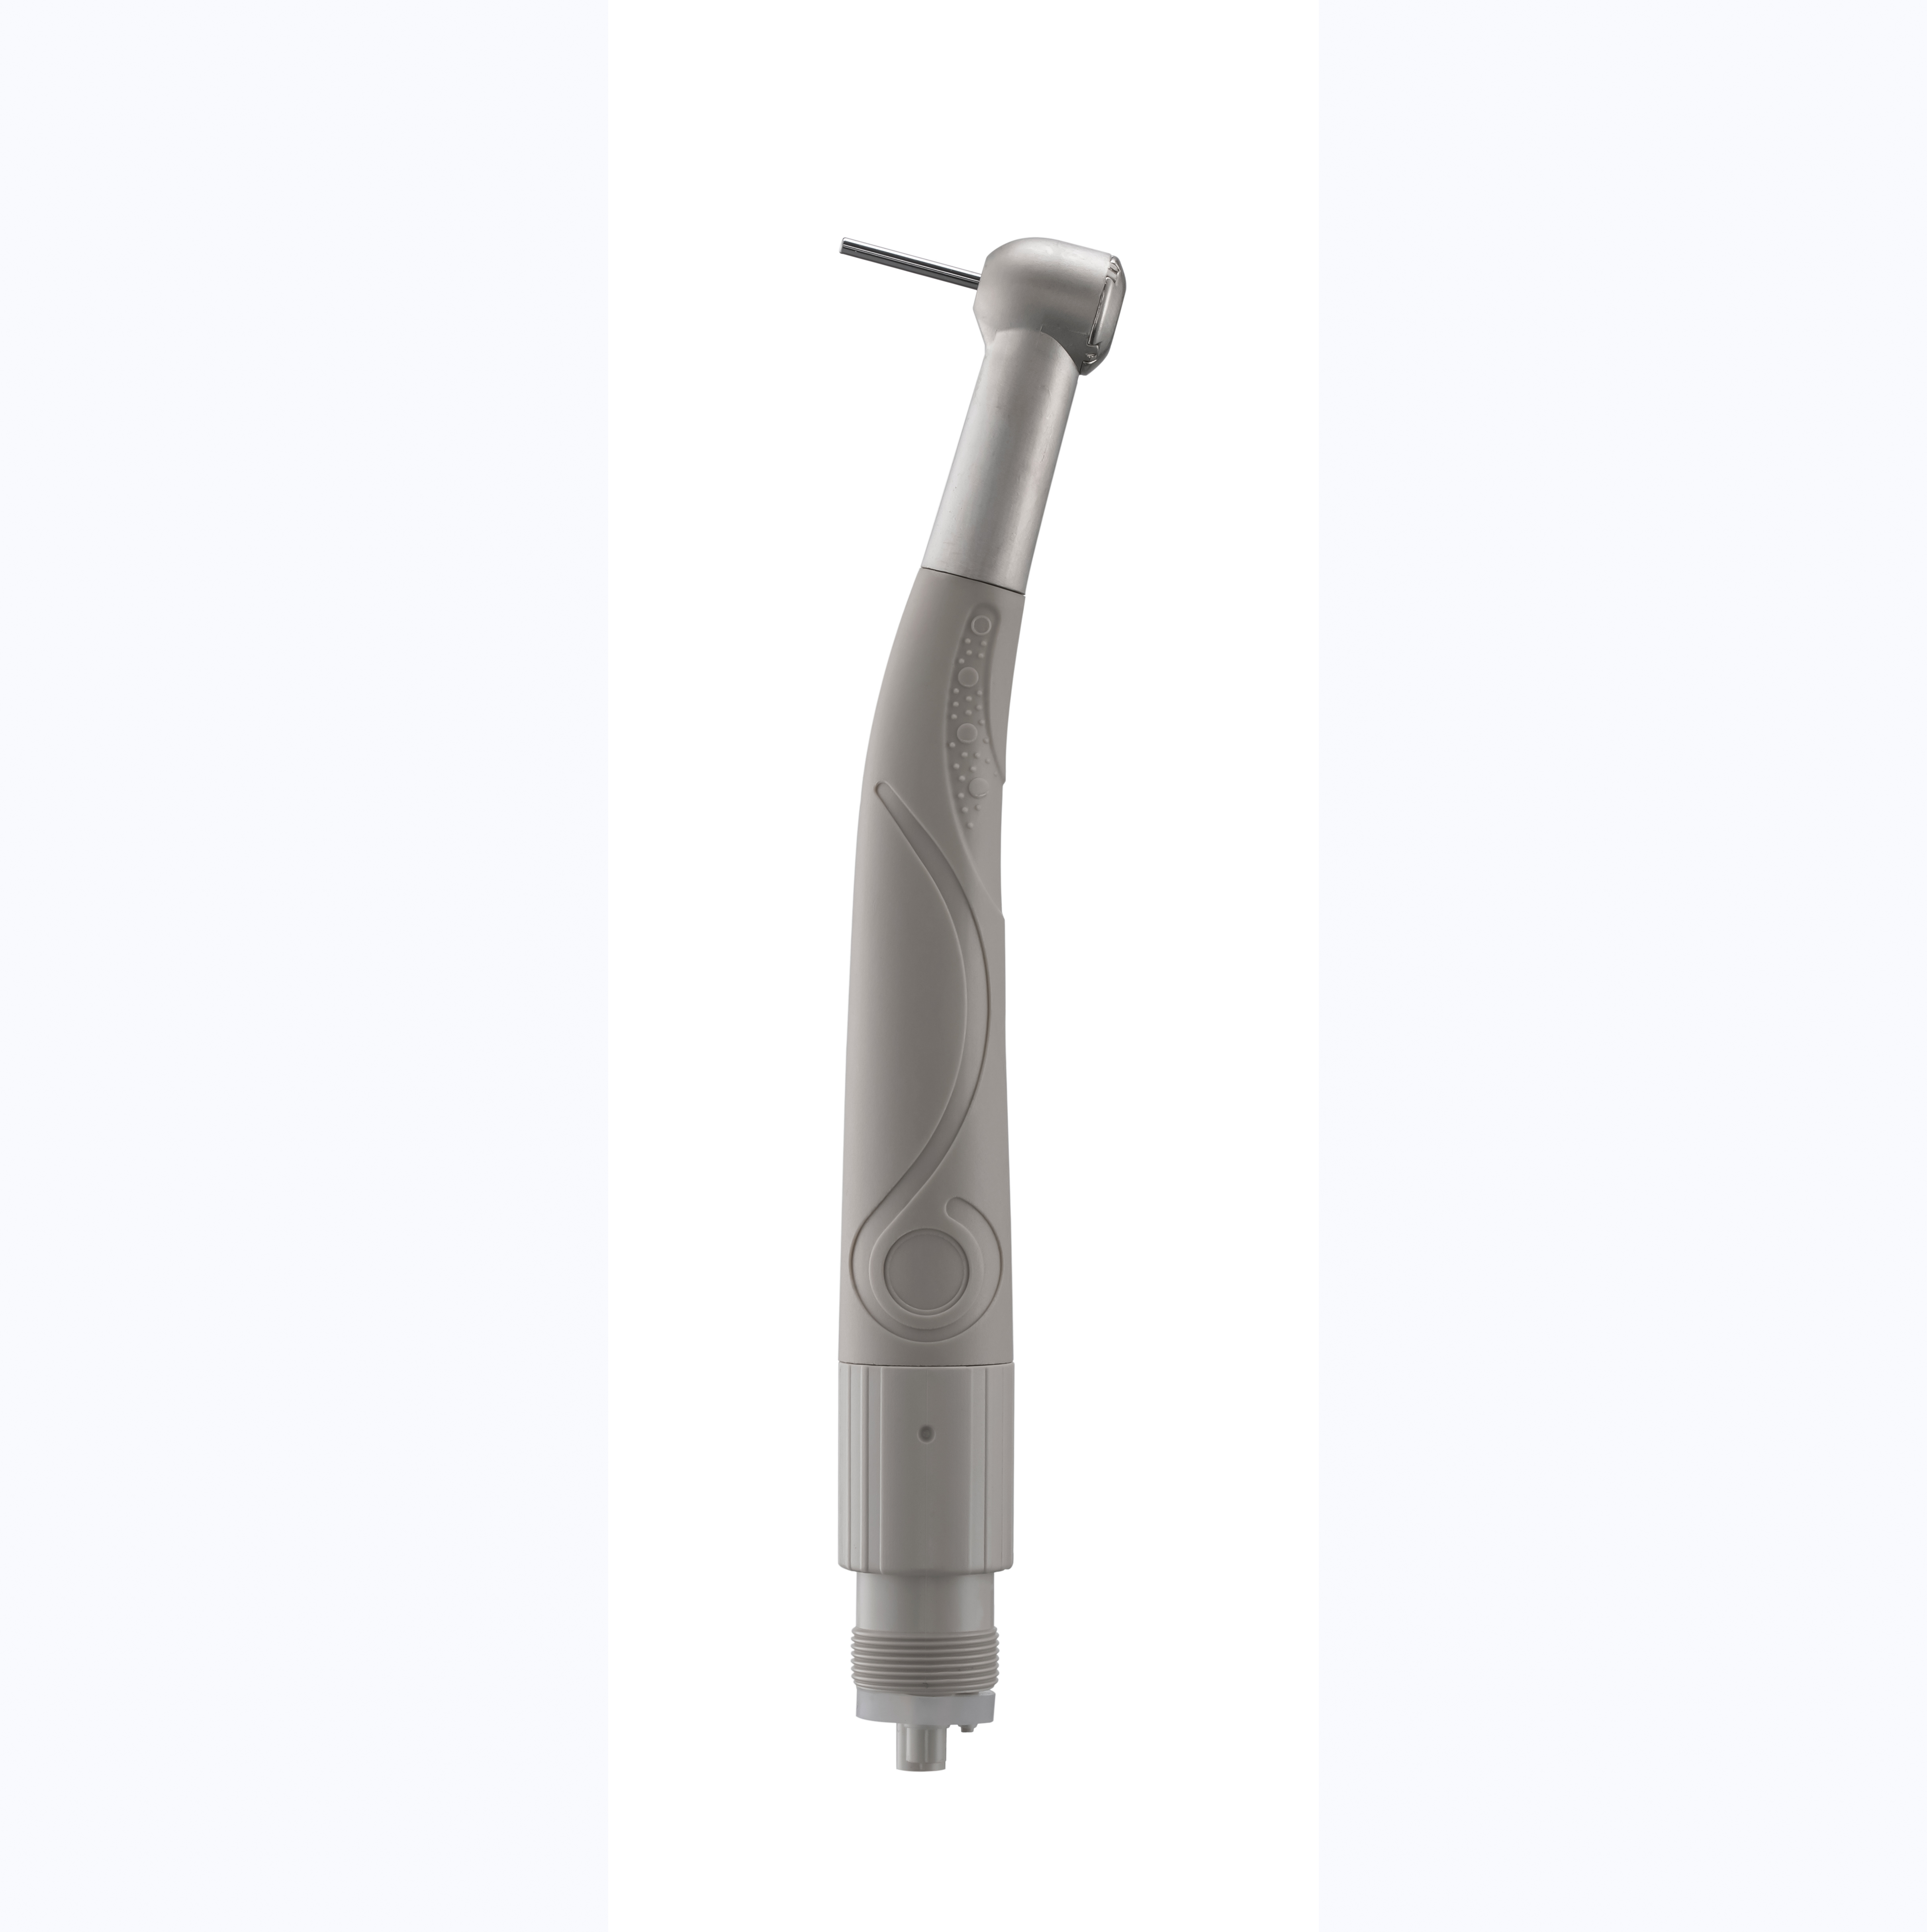 Bililhon nga Disposable Anti-Suction Design Dental Handpiece nga adunay Air Turbine